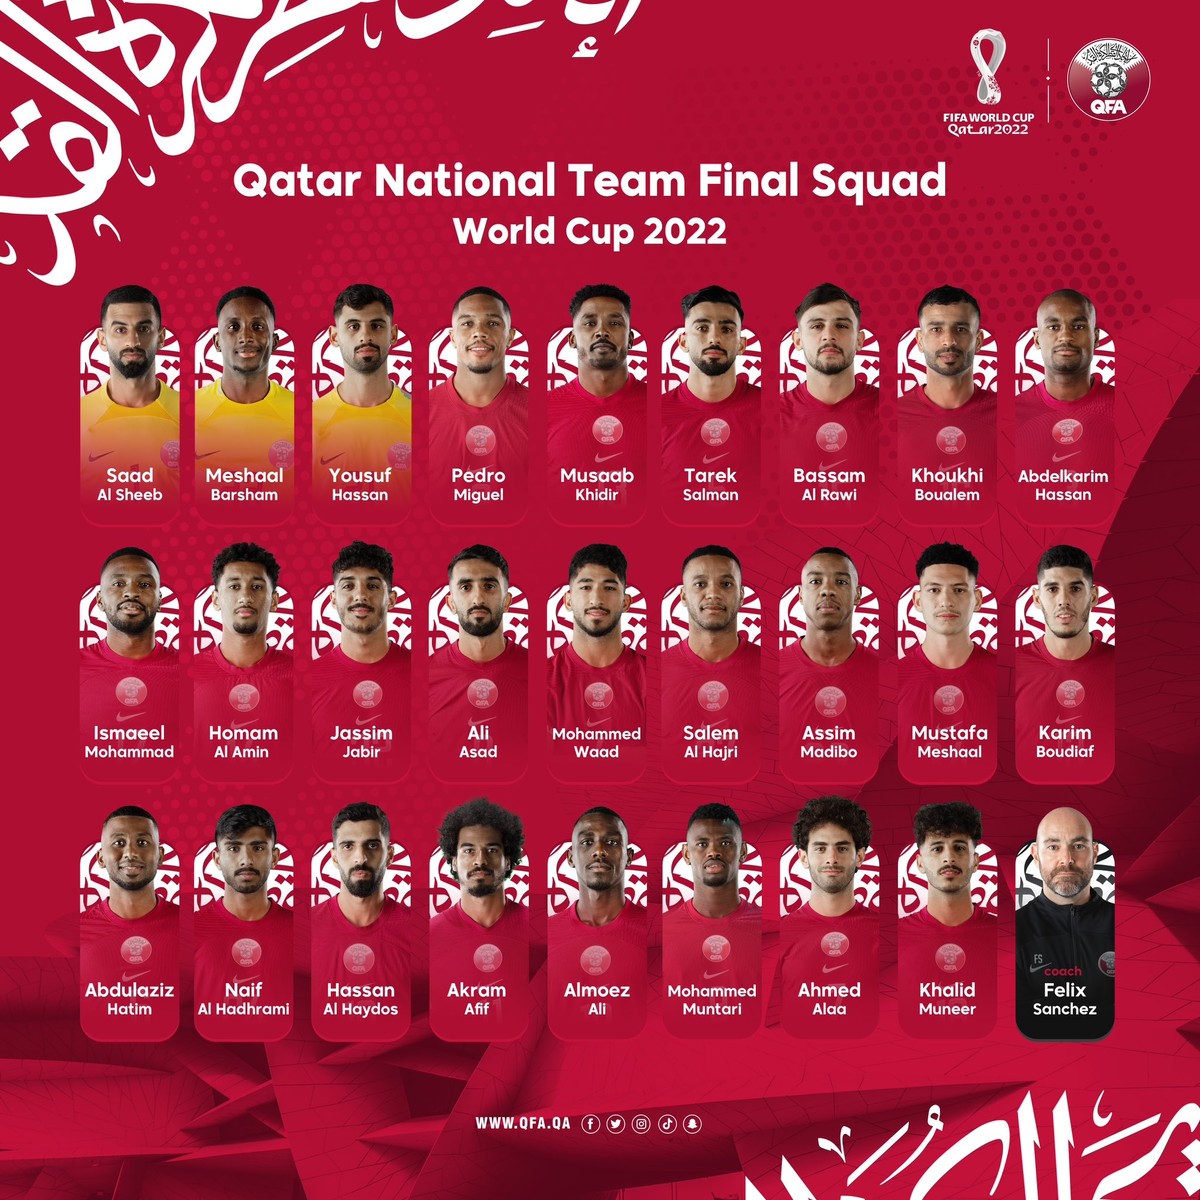 Copa do Mundo 2022: como ver a lista de convocados de todas as